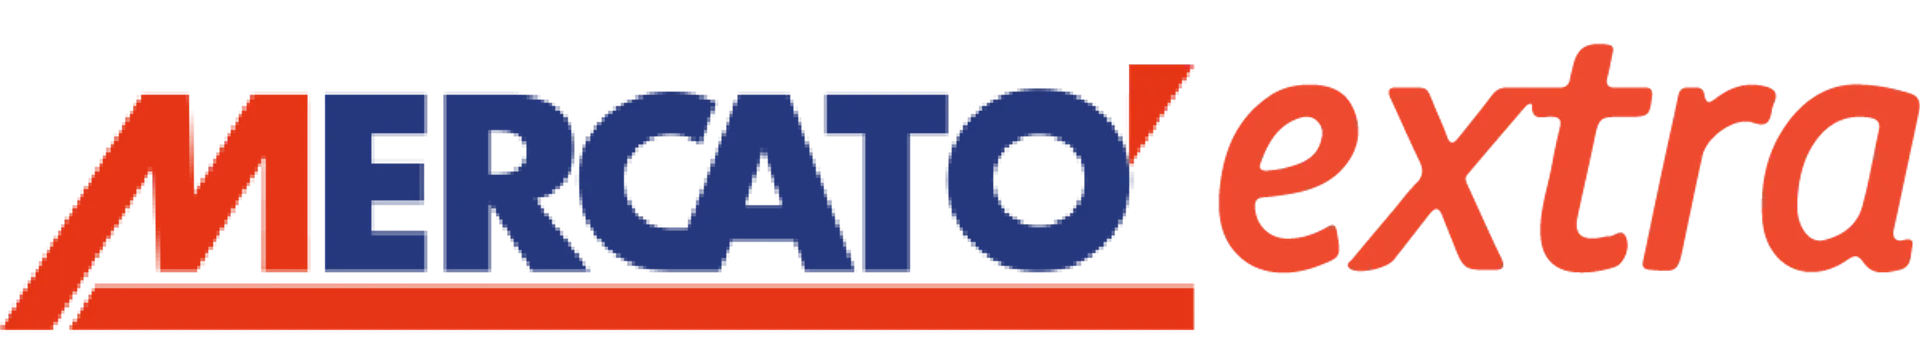 MERCATÒ EXTRA logo